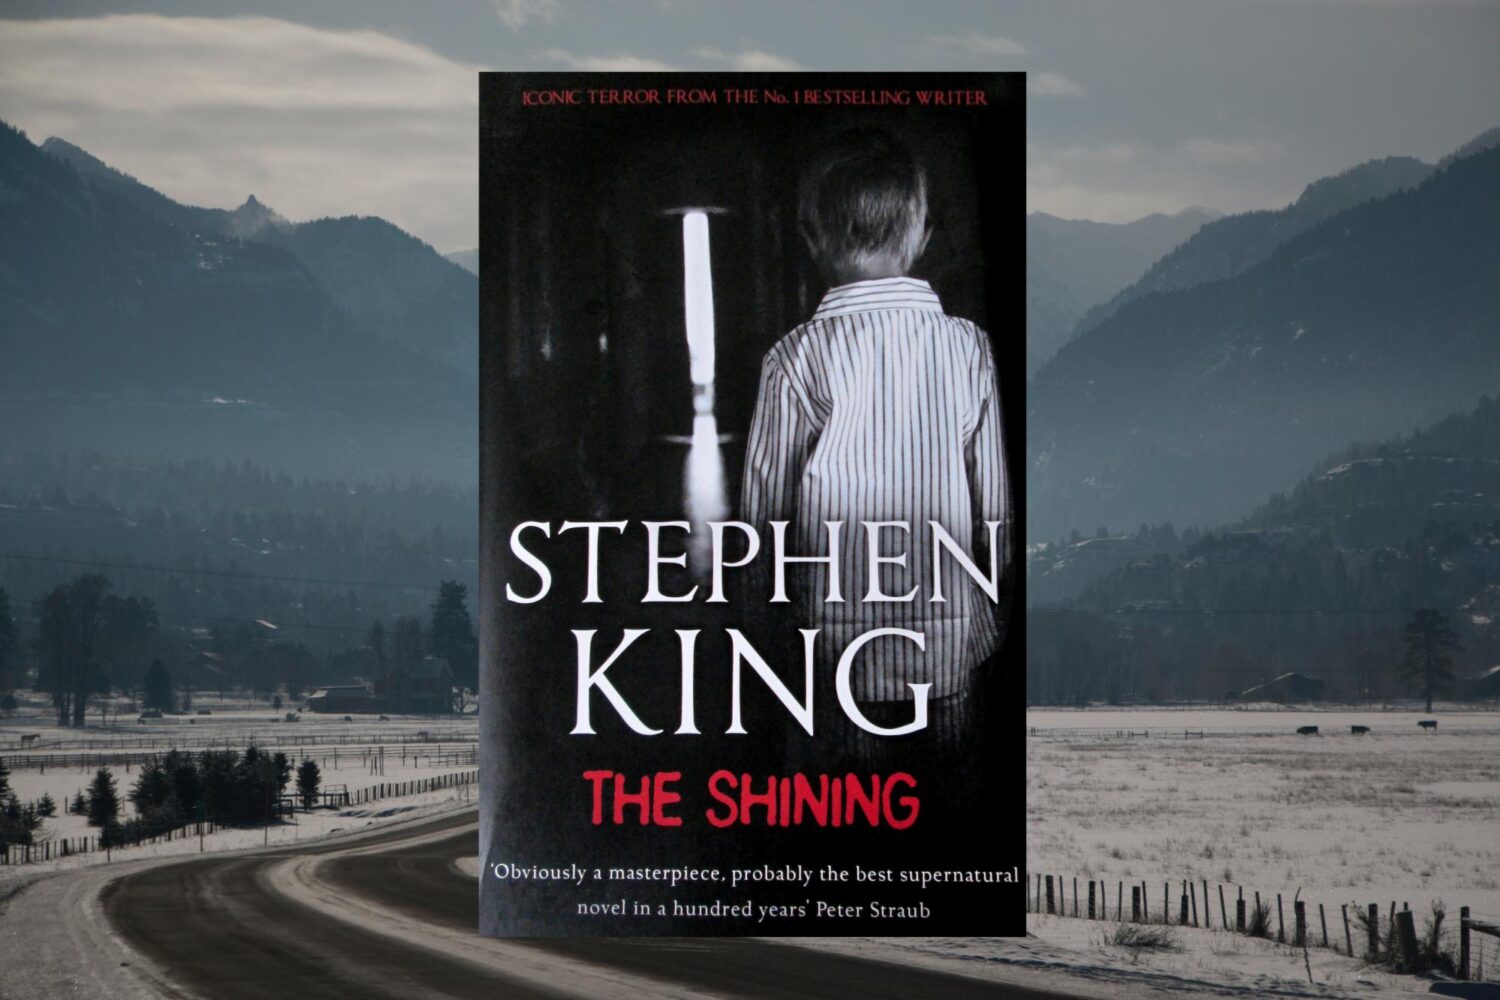 The Shining by Stephen King - Views Heard